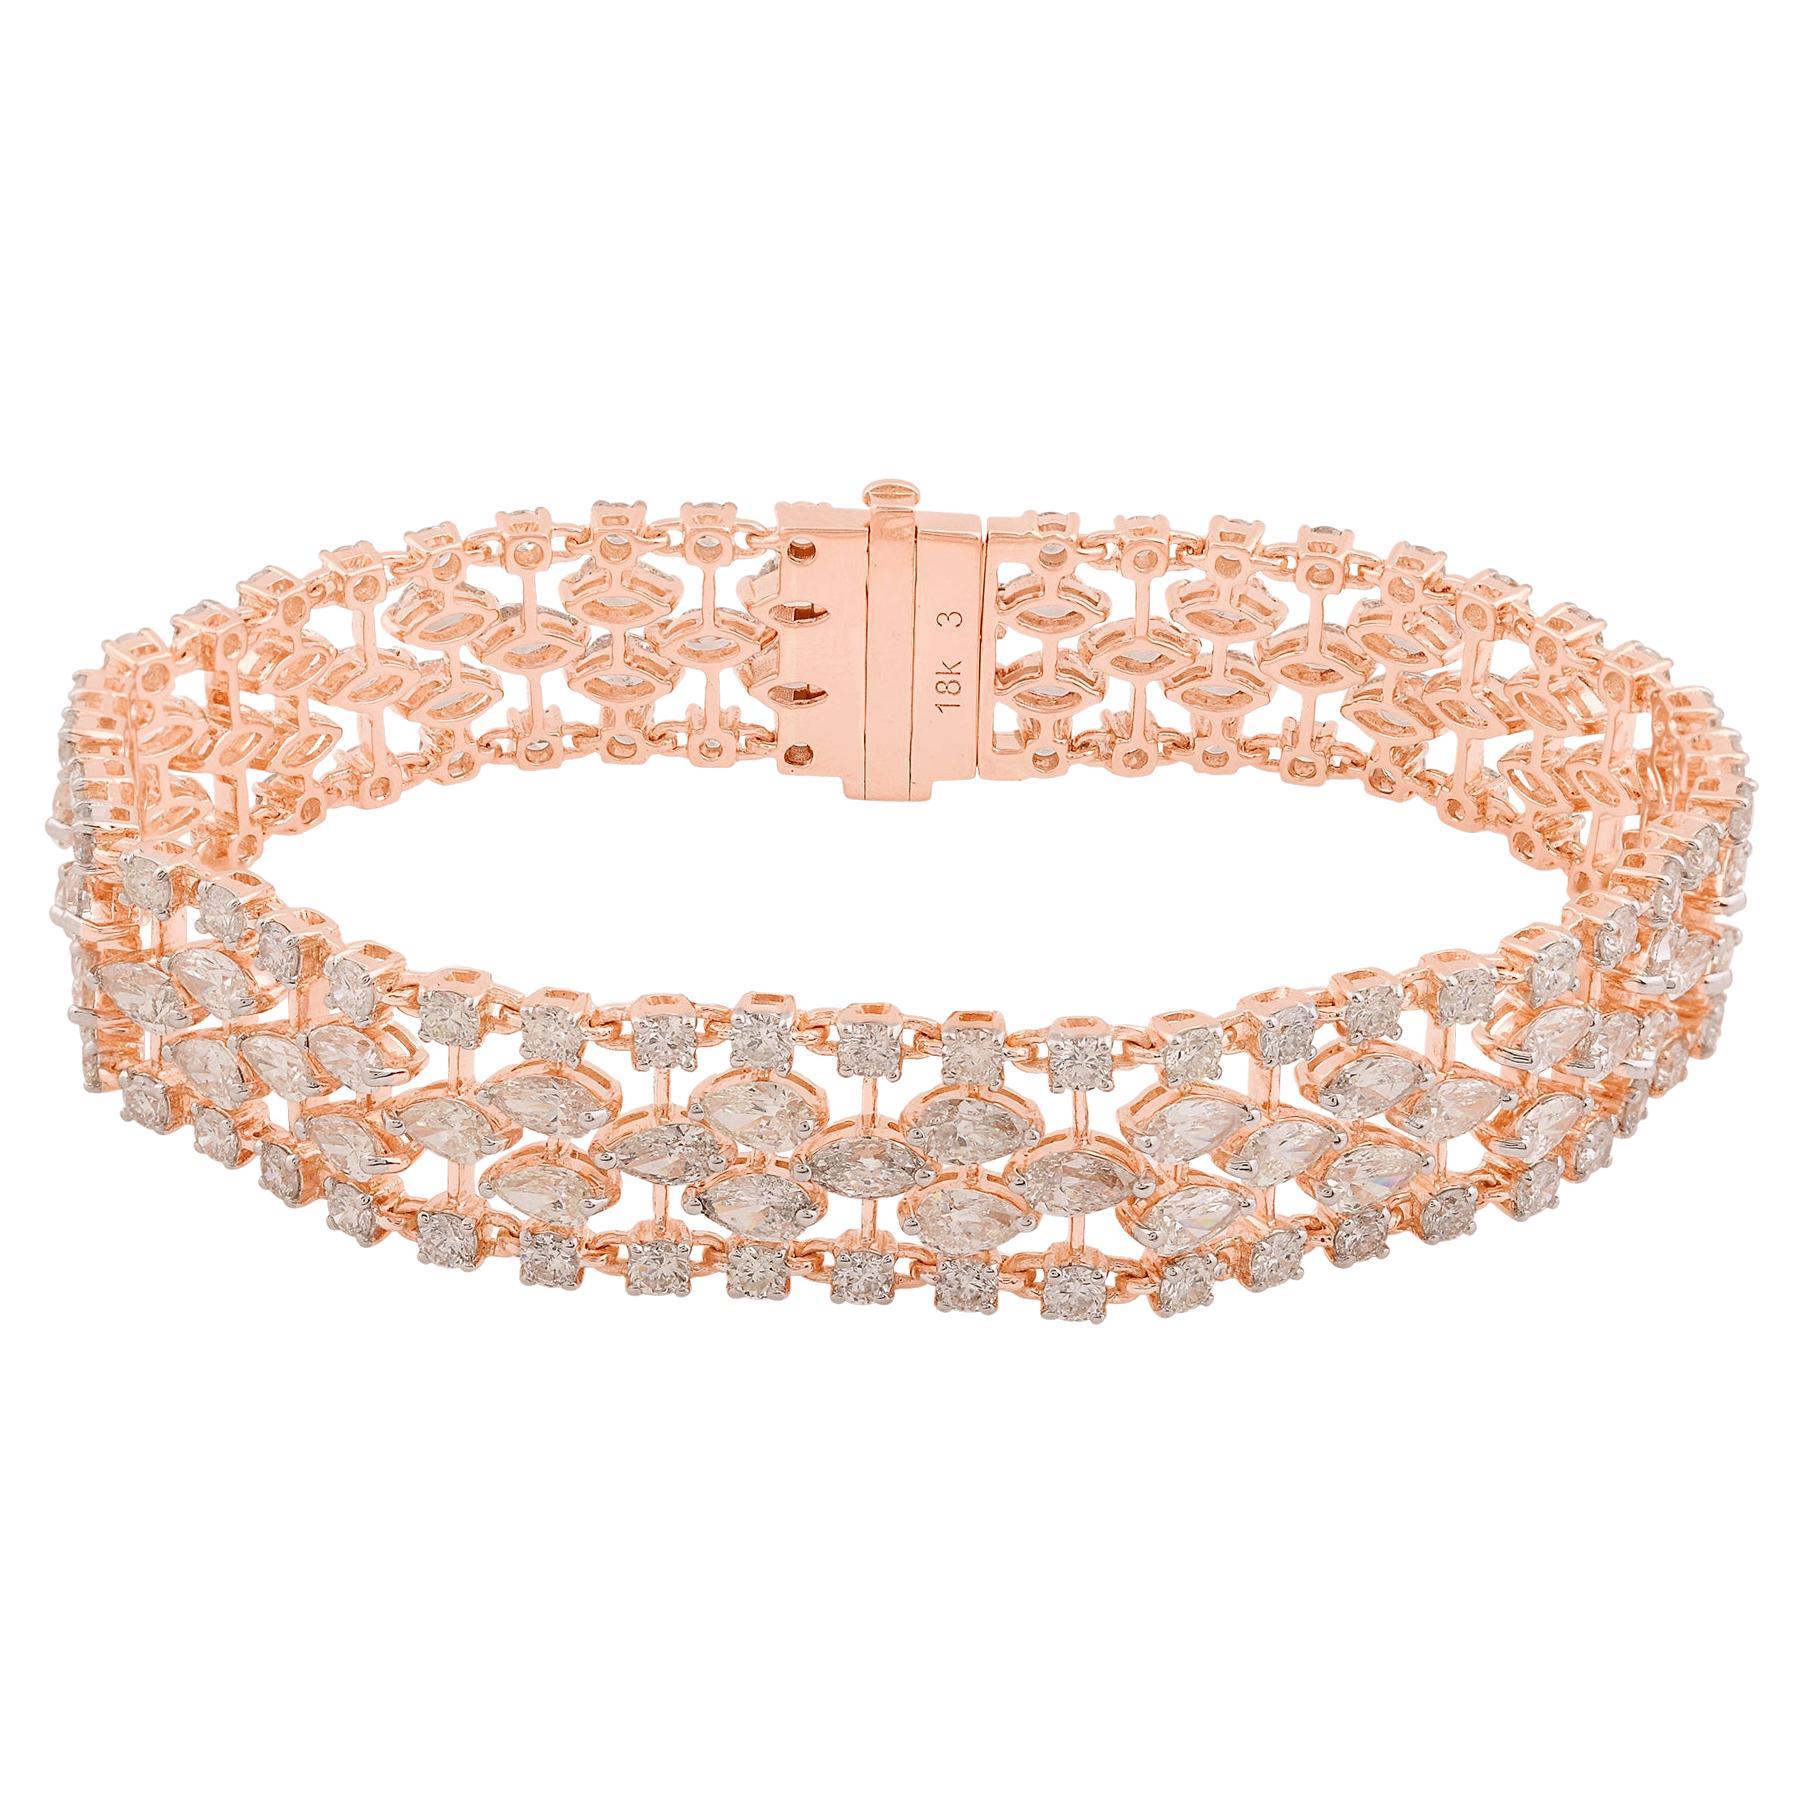 12 Carat SI Clarity HI Color Diamond Wedding Bracelet 18 Karat Rose Gold Jewelry For Sale